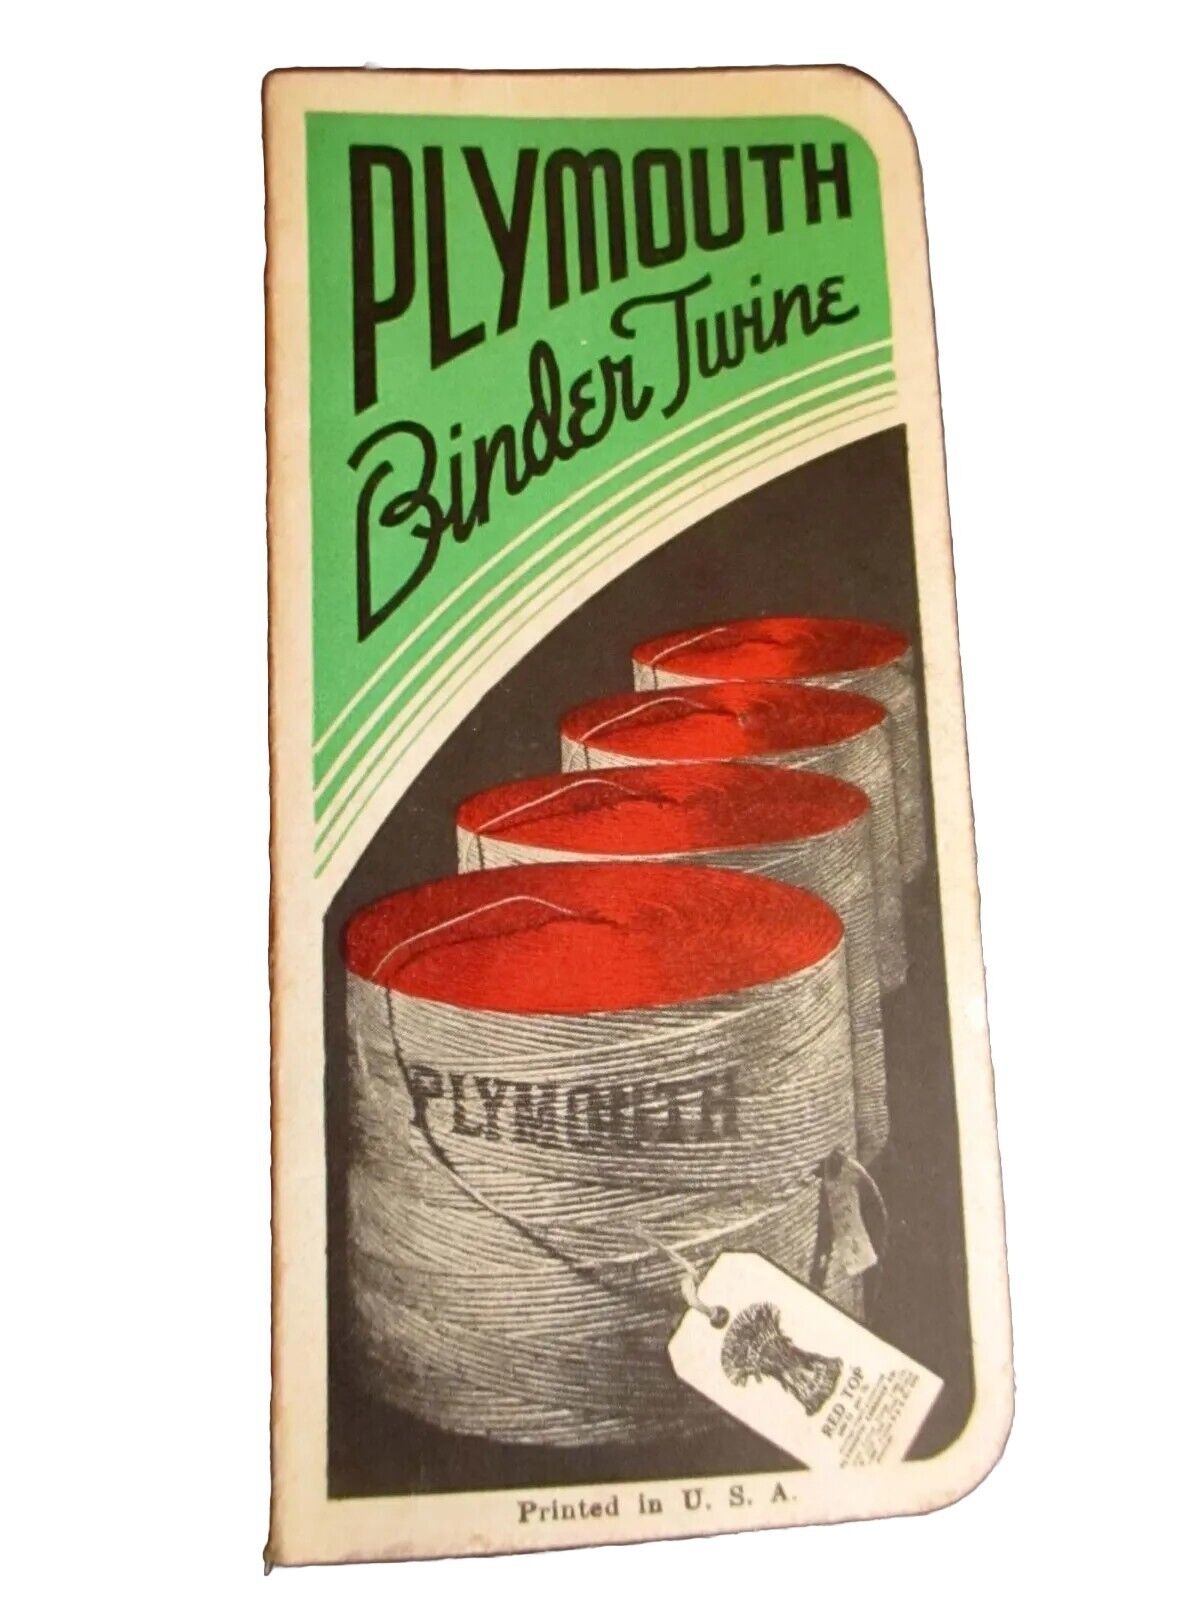 1937 1938 PLYMOUTH BINDER TWINE ADVERTISING POCKET REMINDER BOOKLET